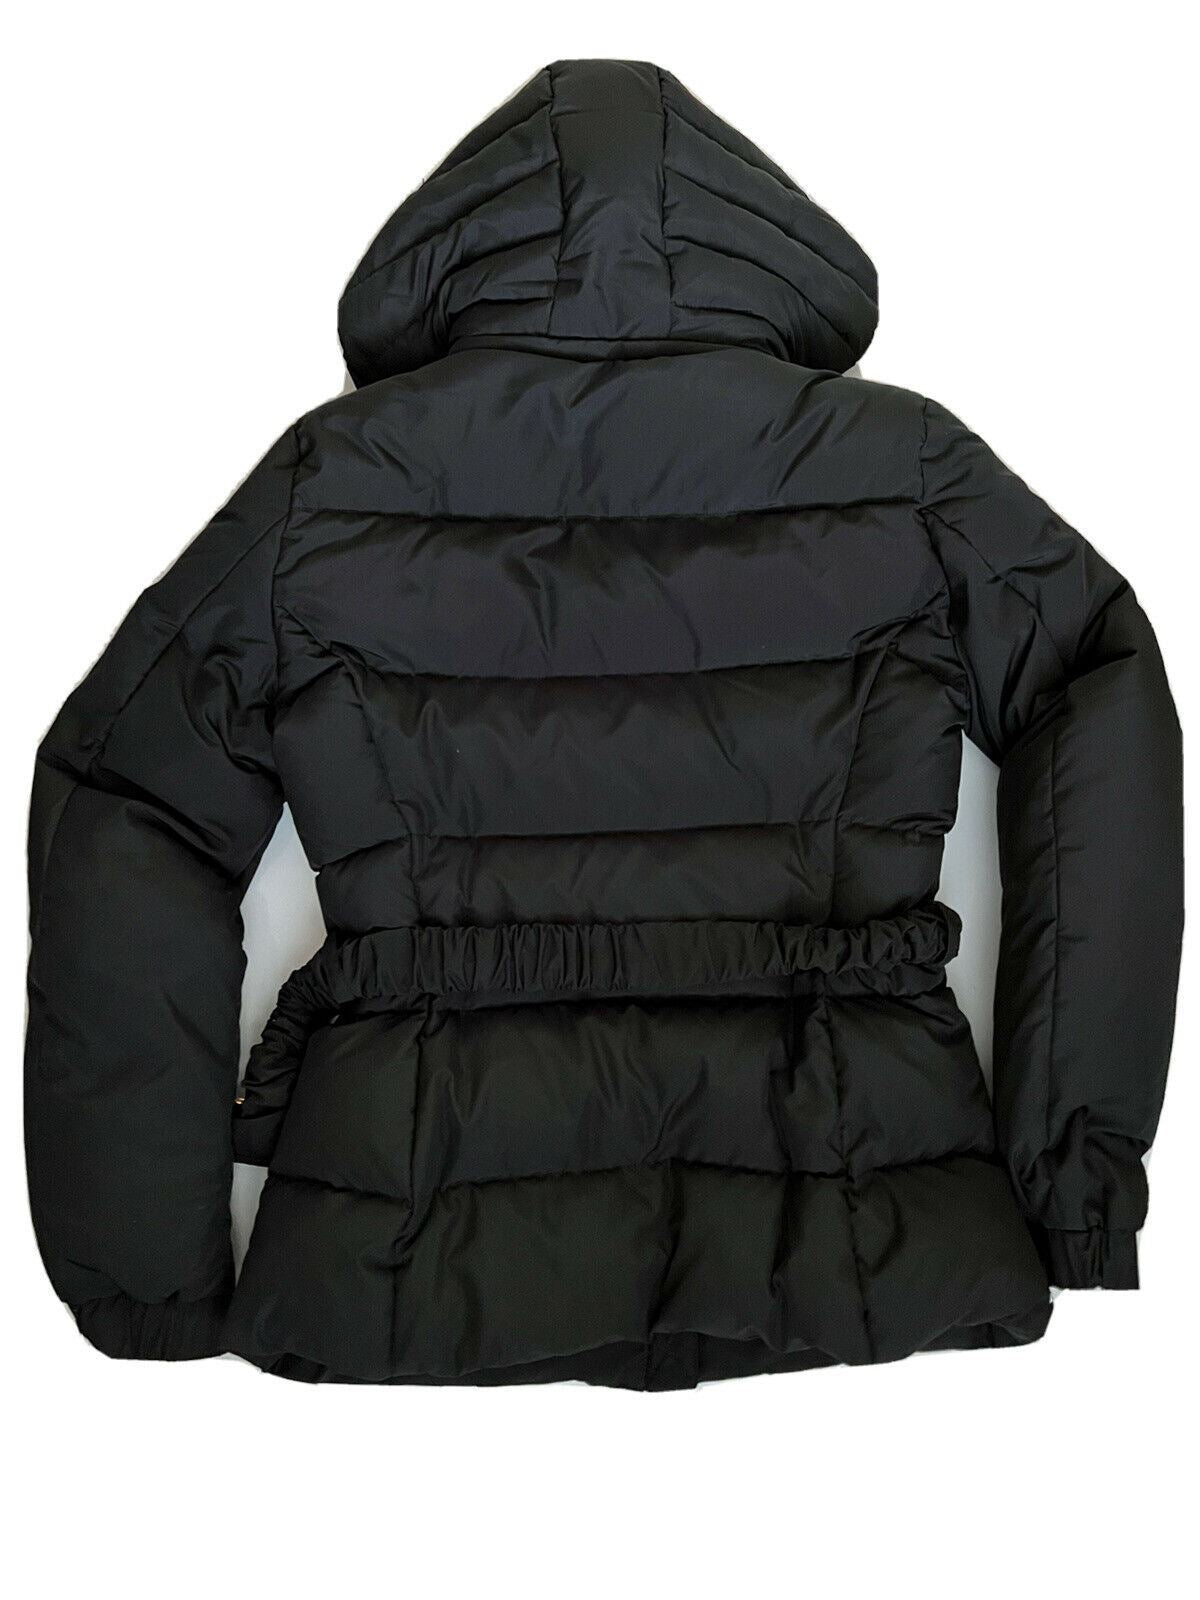 NWT $1195 Versace Women's Black Down Parka Jacket 4 US (40 Euro) A88779S Italy